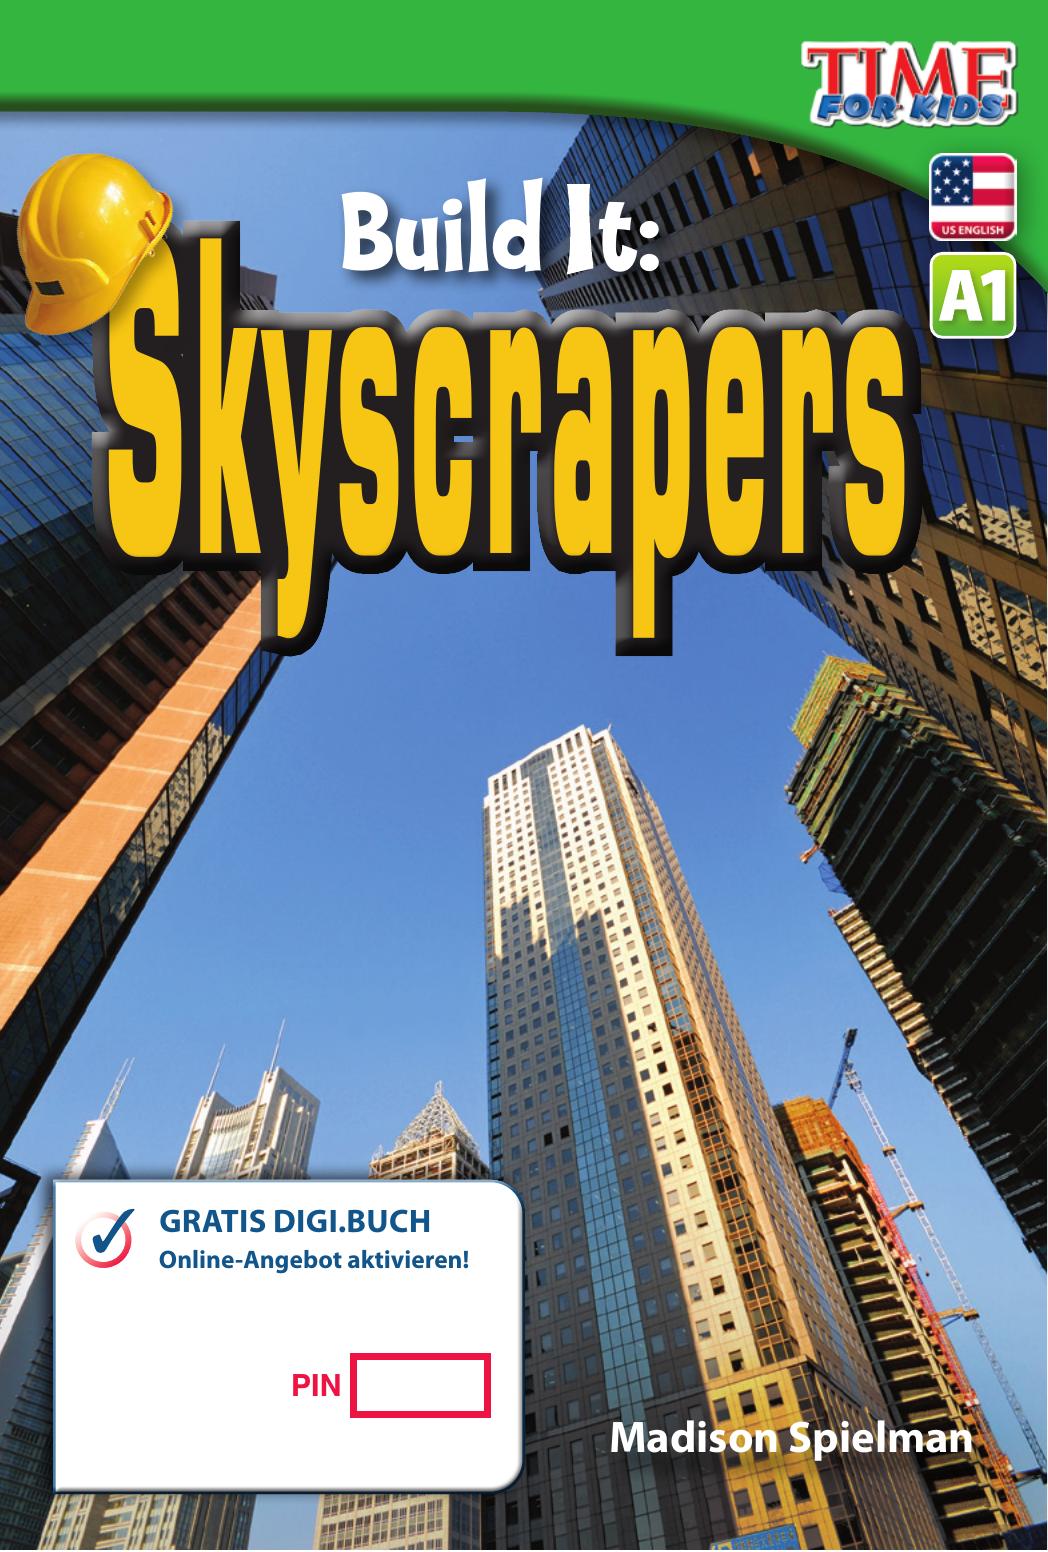 A1 – Build It: Skyscrapers